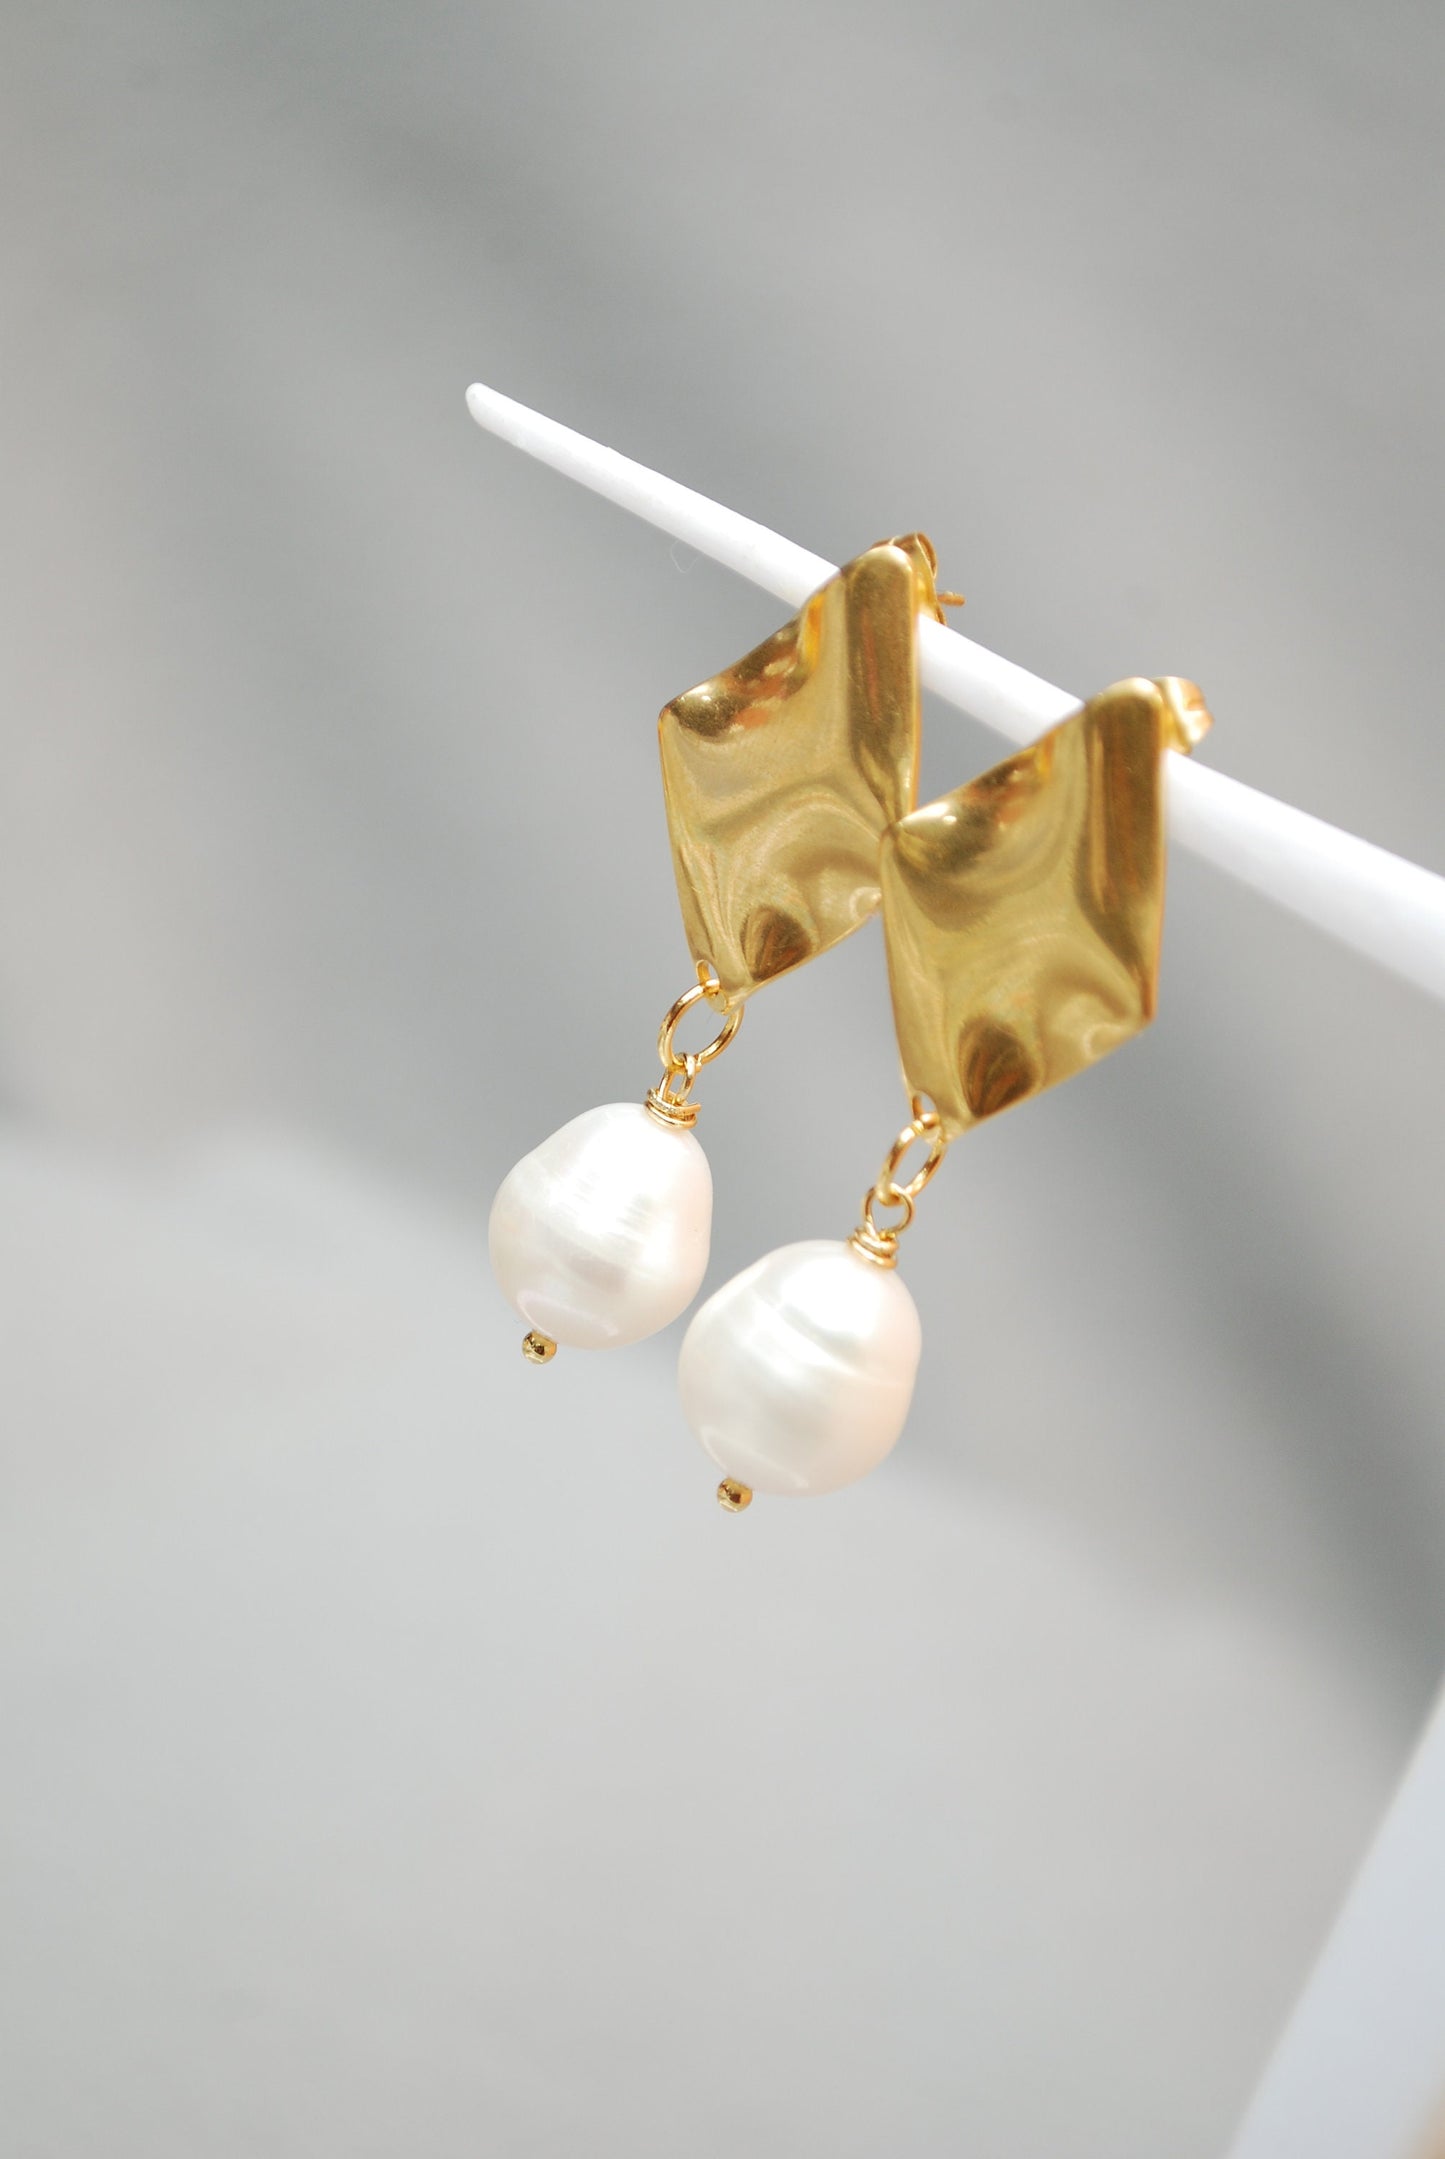 Chunky gold stainless steel earrings, Statement earrings with rhombus clasps", freshwater pearl earrings, Estibela design. 5cm - 2"